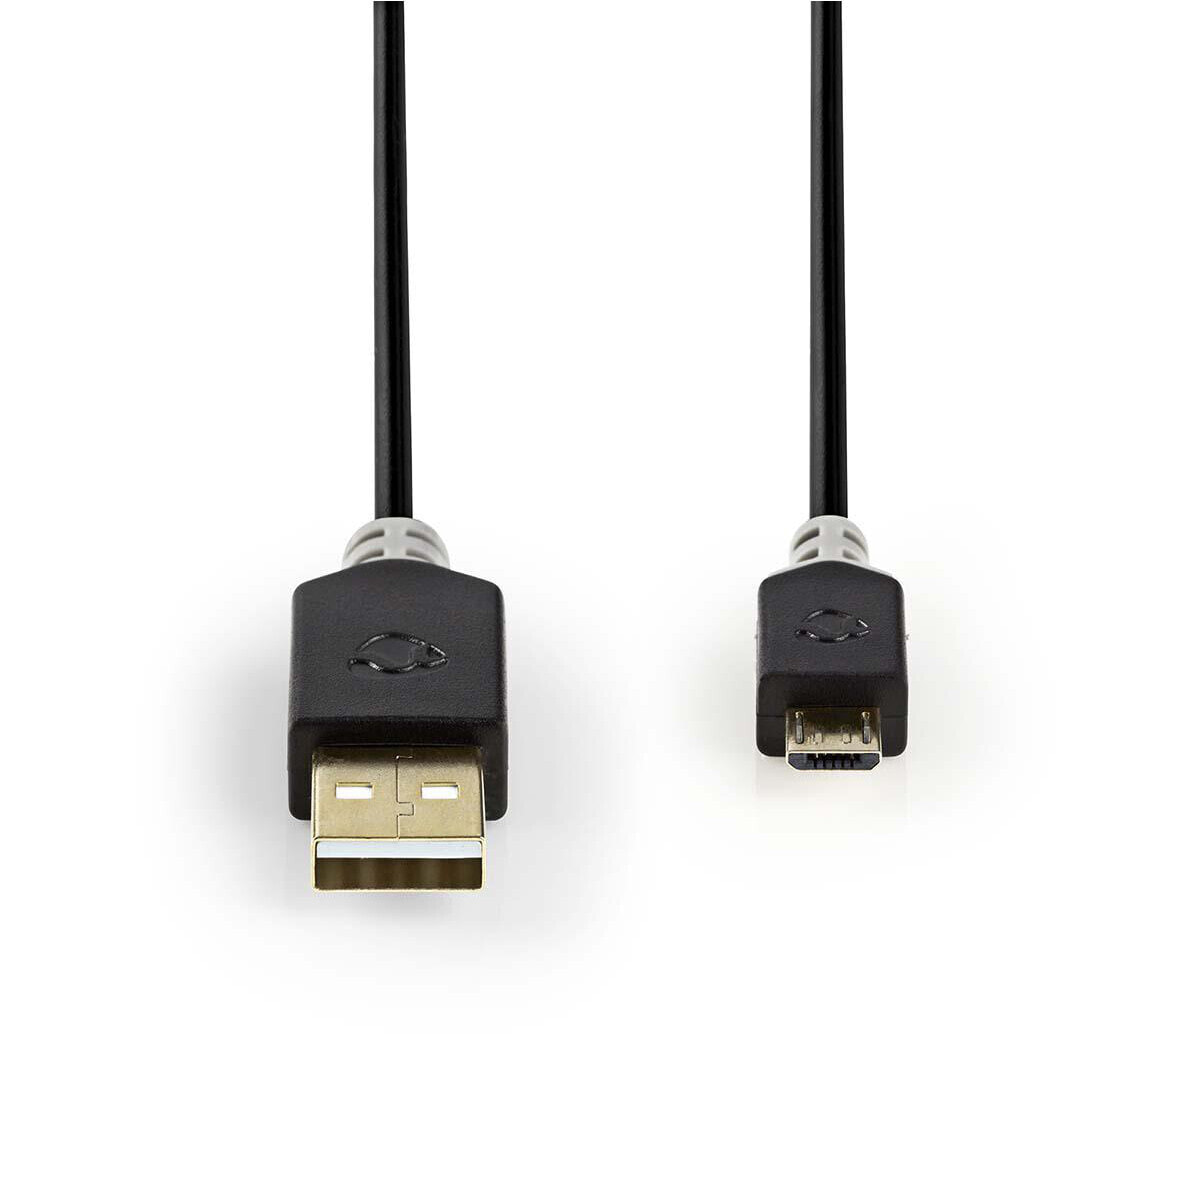 Nedis USB-Kabel| USB 2.0| USB-A Stecker| USB Micro-B Stecker| 480 Mbps| Vergoldet| 1.00 m| rund| PVC| Anthrazit| Verpackung mit Sichtfenster